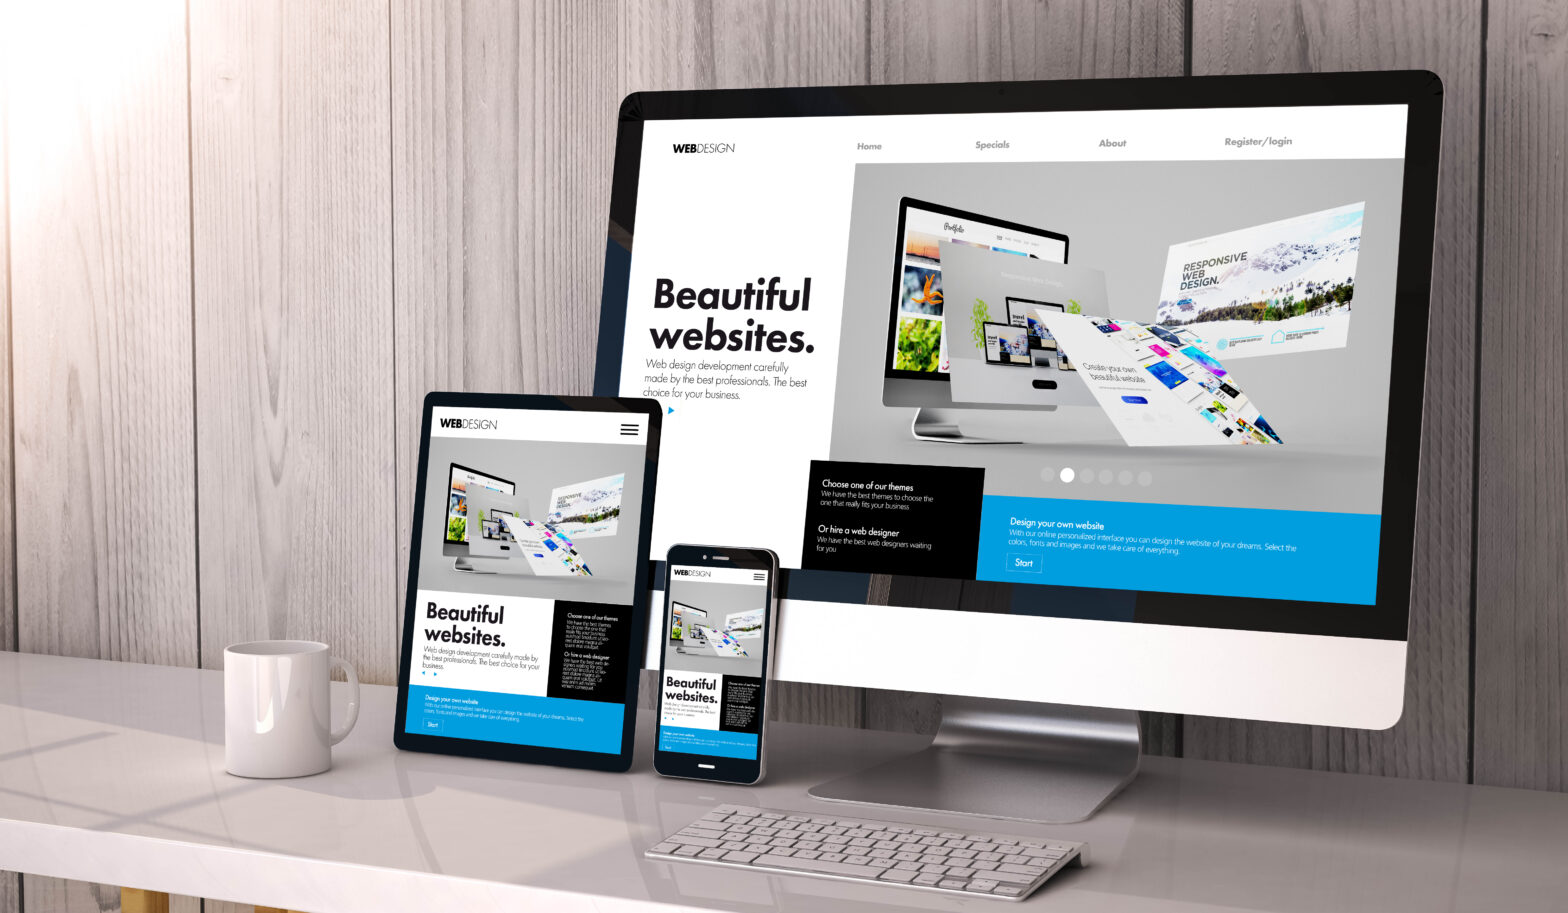 Mobile-friendly websites and desktop site